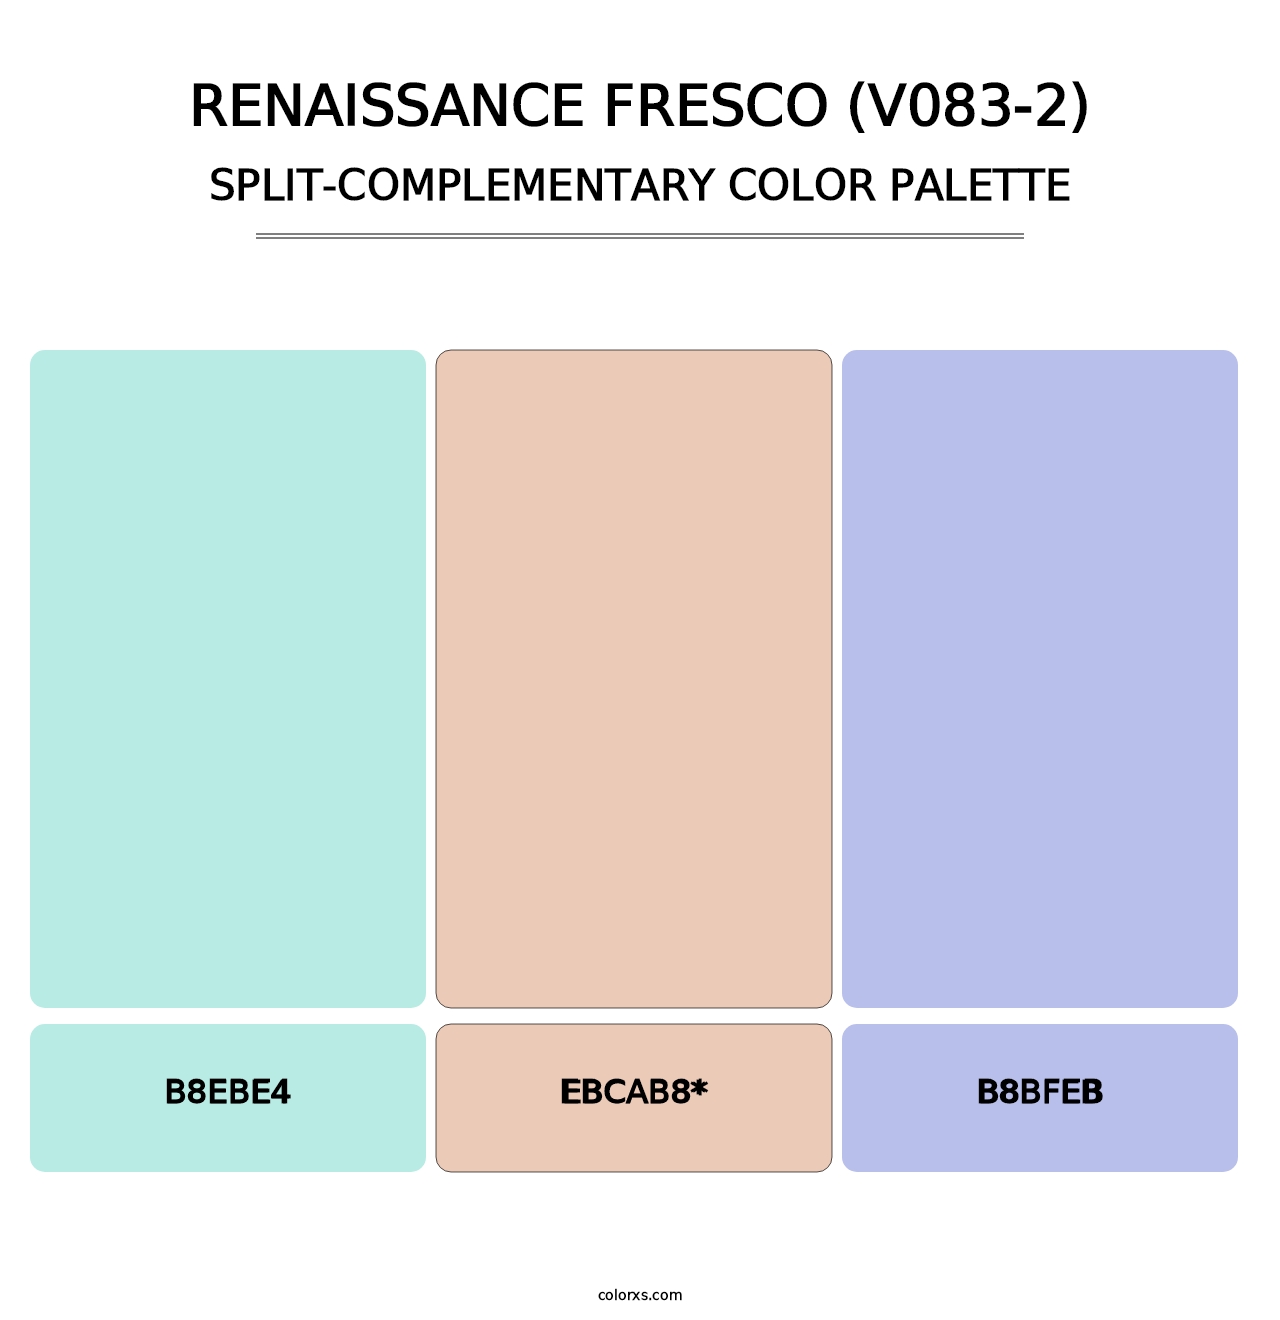 Renaissance Fresco (V083-2) - Split-Complementary Color Palette